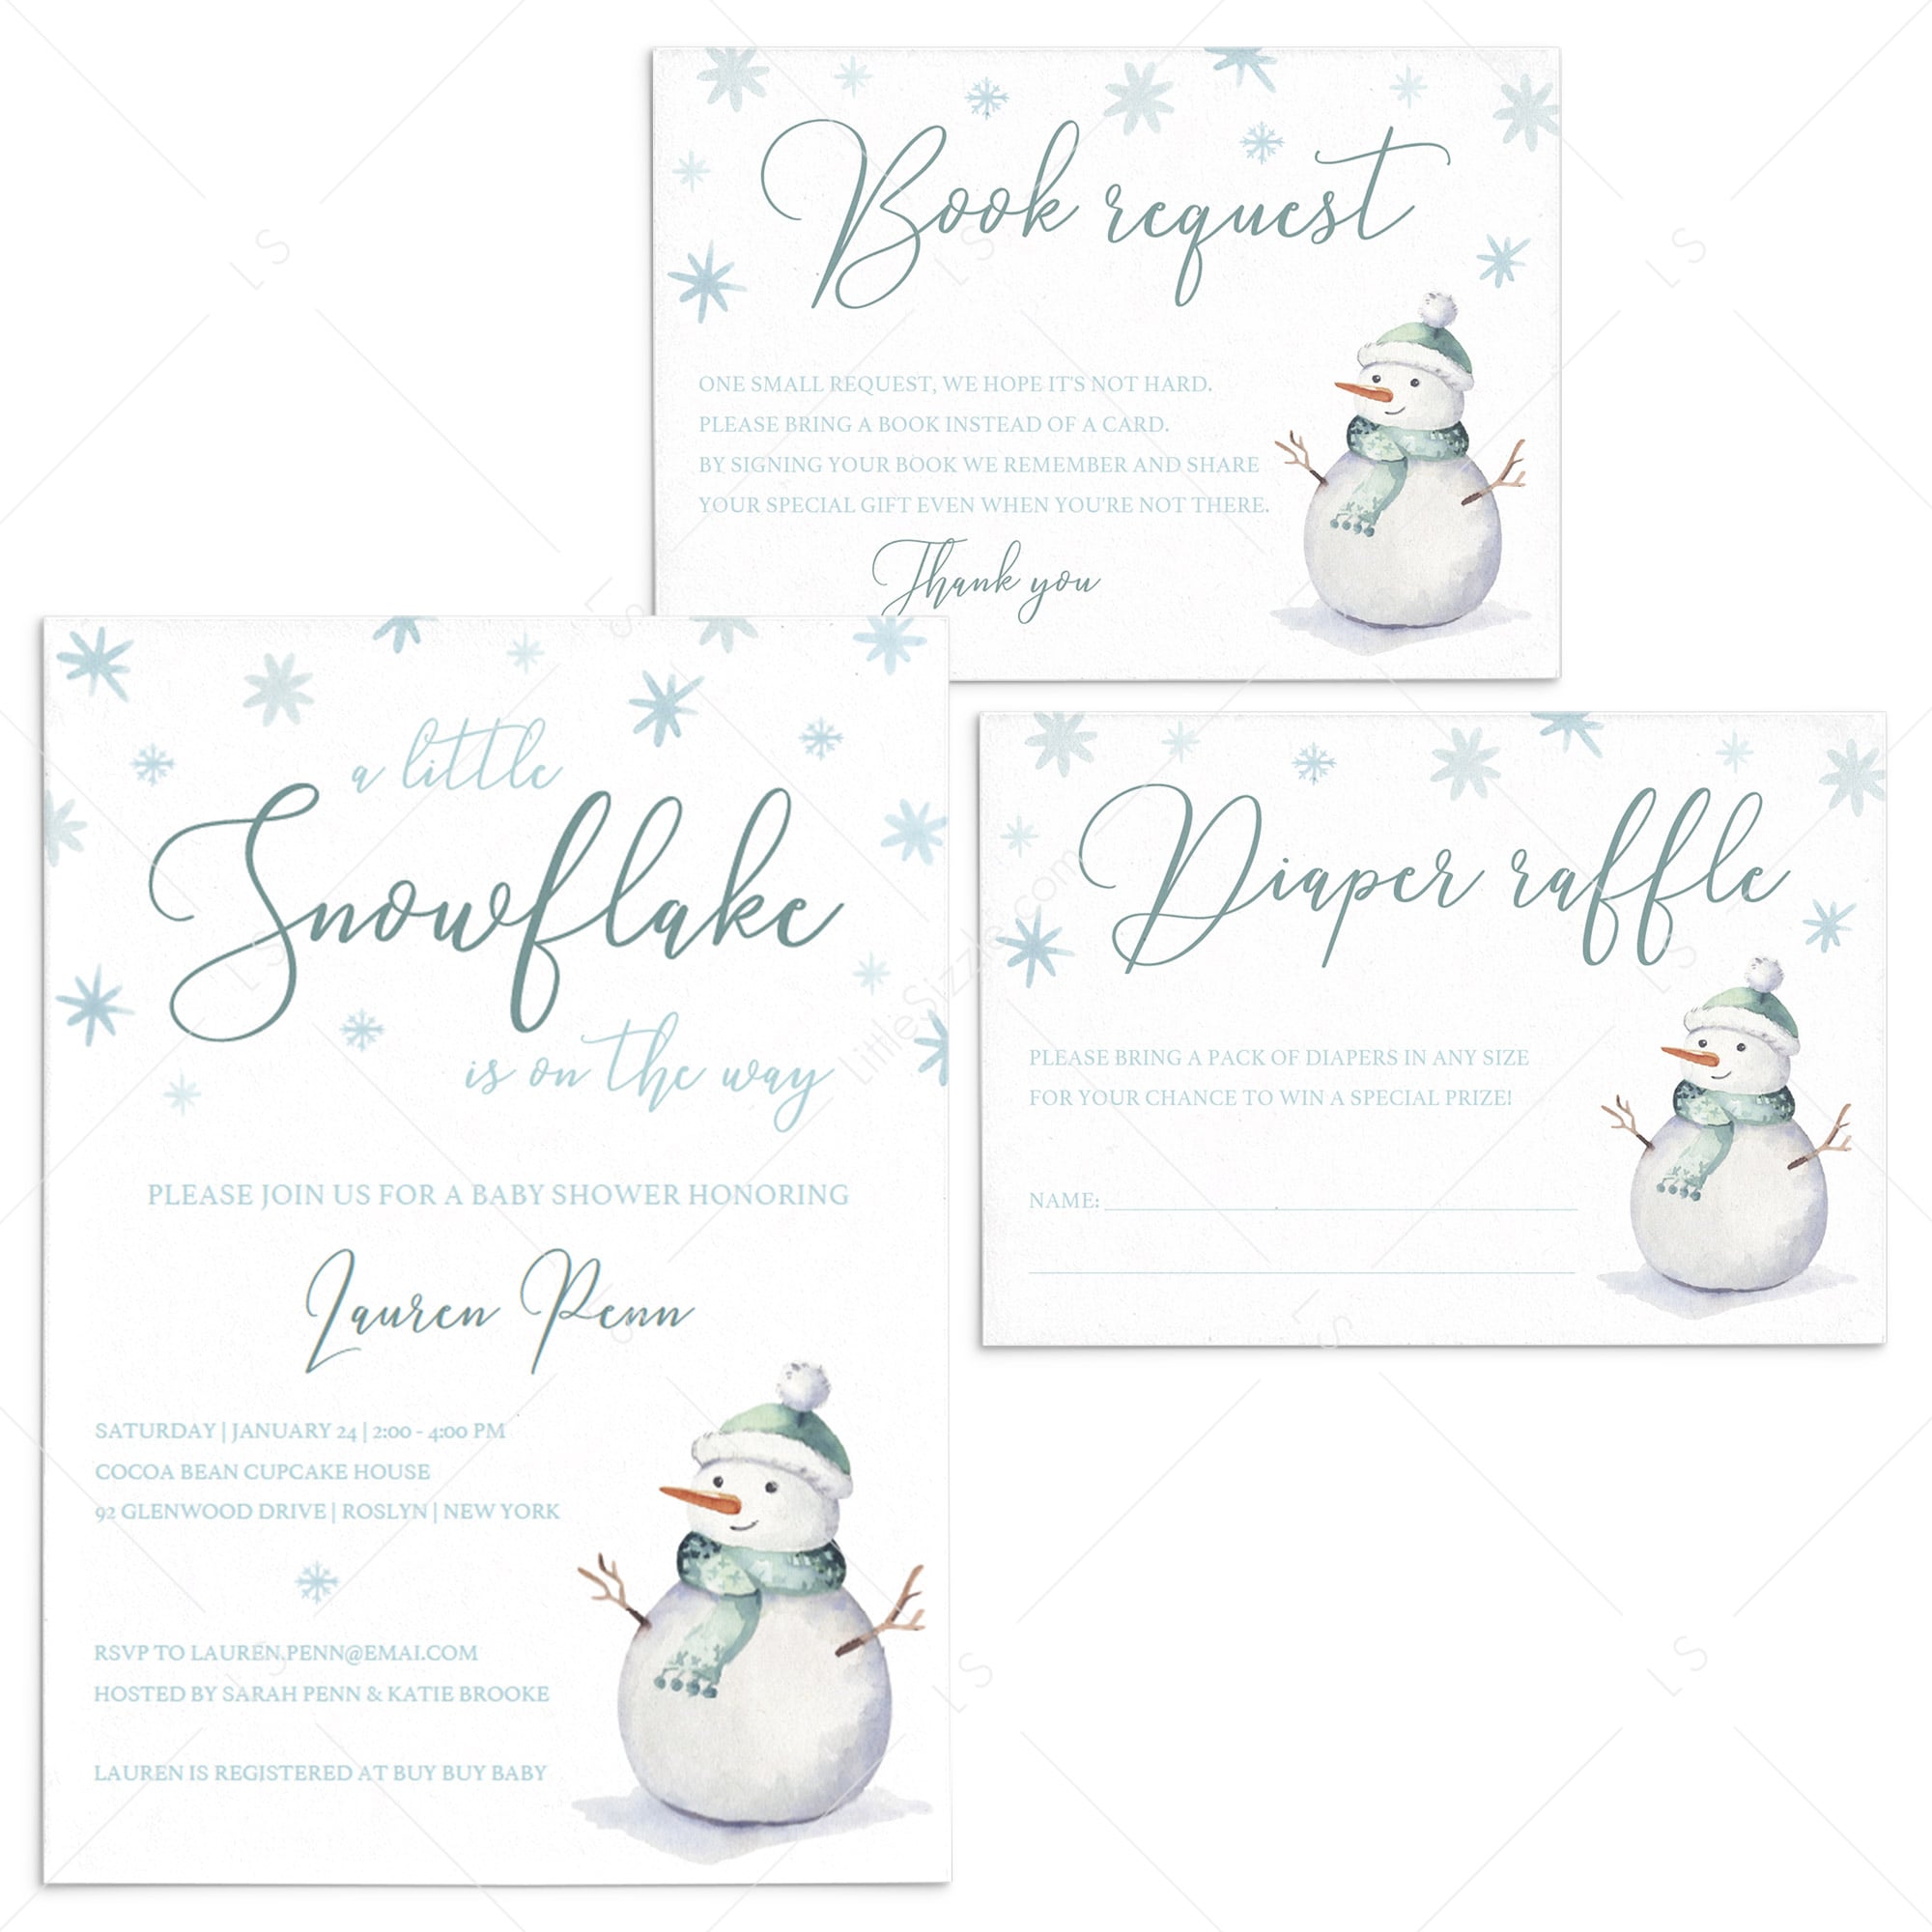 Winter wonderland baby shower invitation kit templates by LittleSizzle